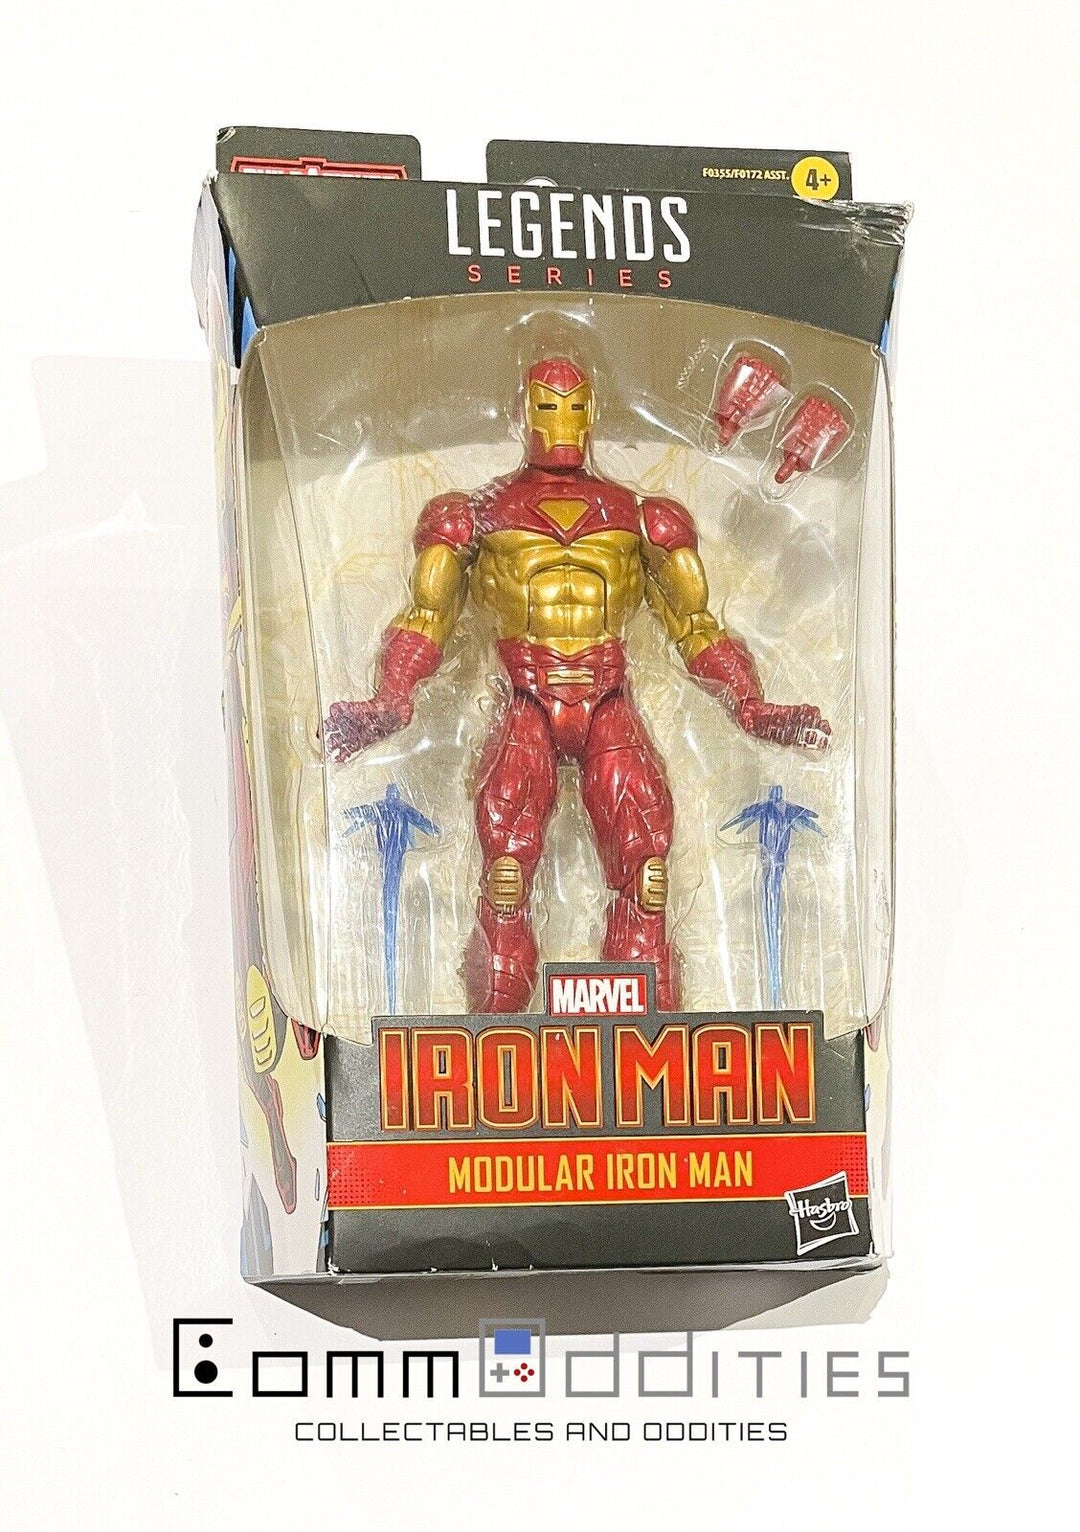 SEALED! Marvel Legends Series: Iron Man - Modular Iron Man Action Figure Toy